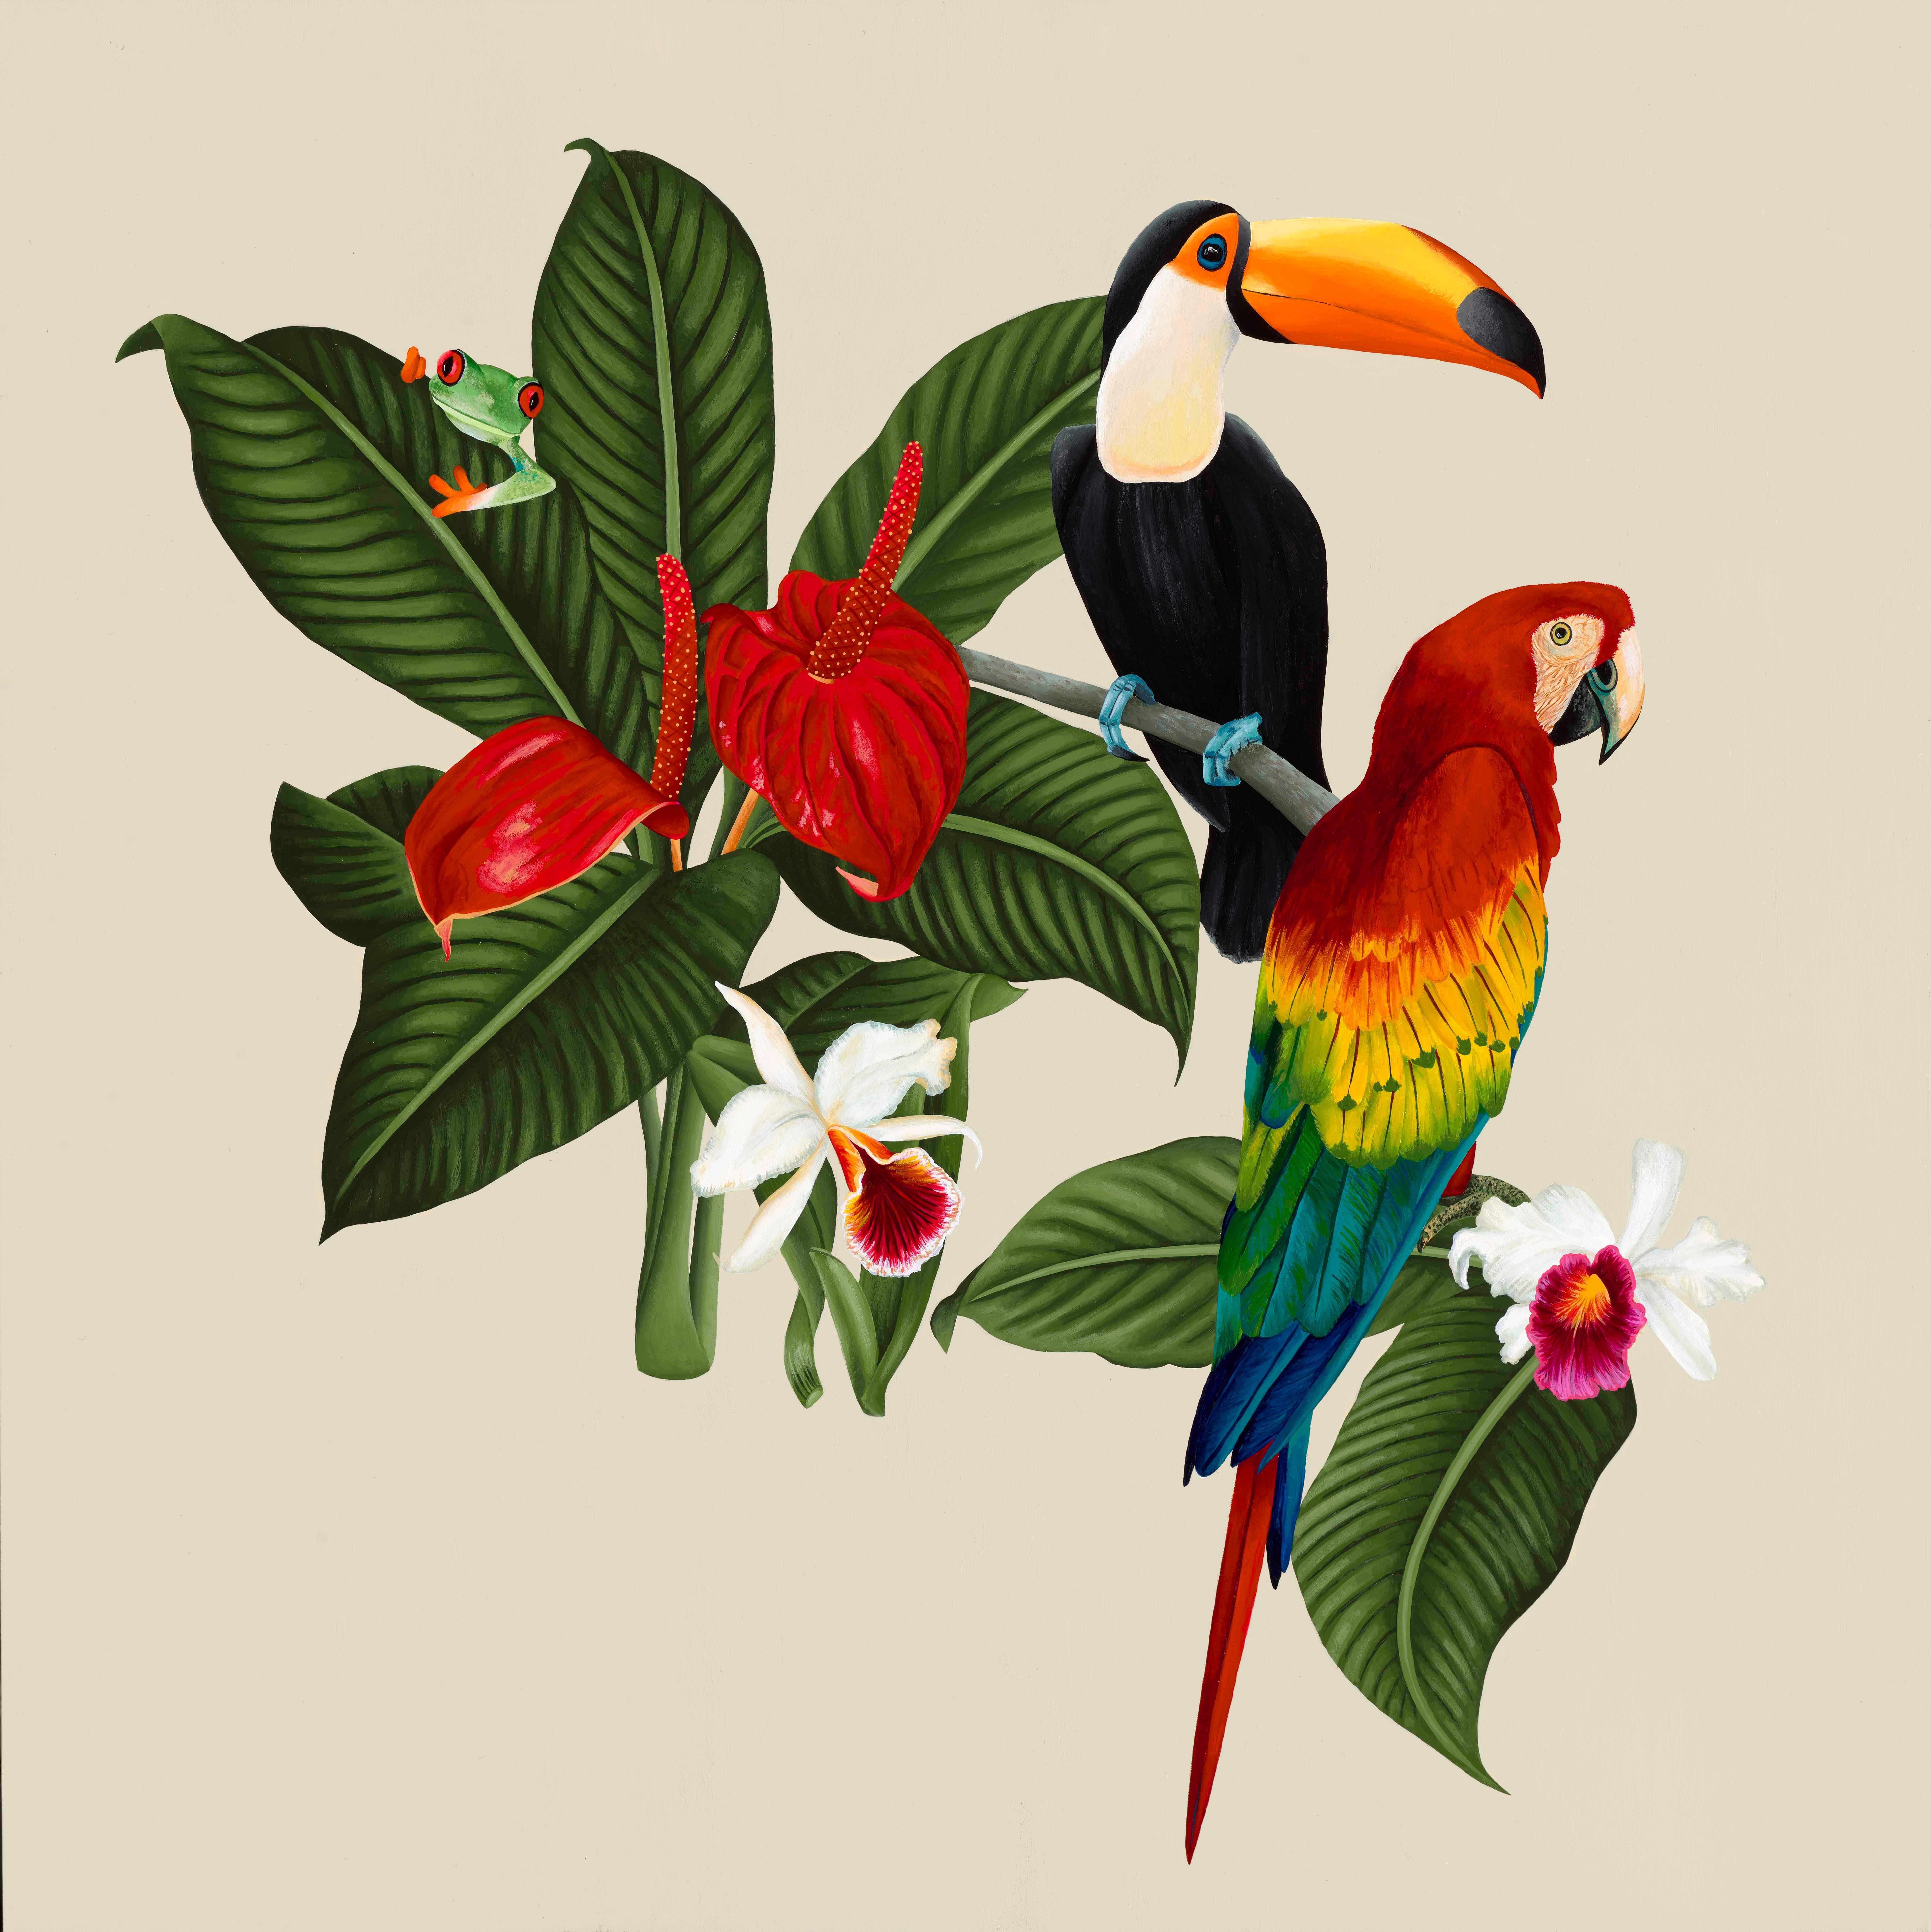 Tropicalia - Painting by Diana Georgie